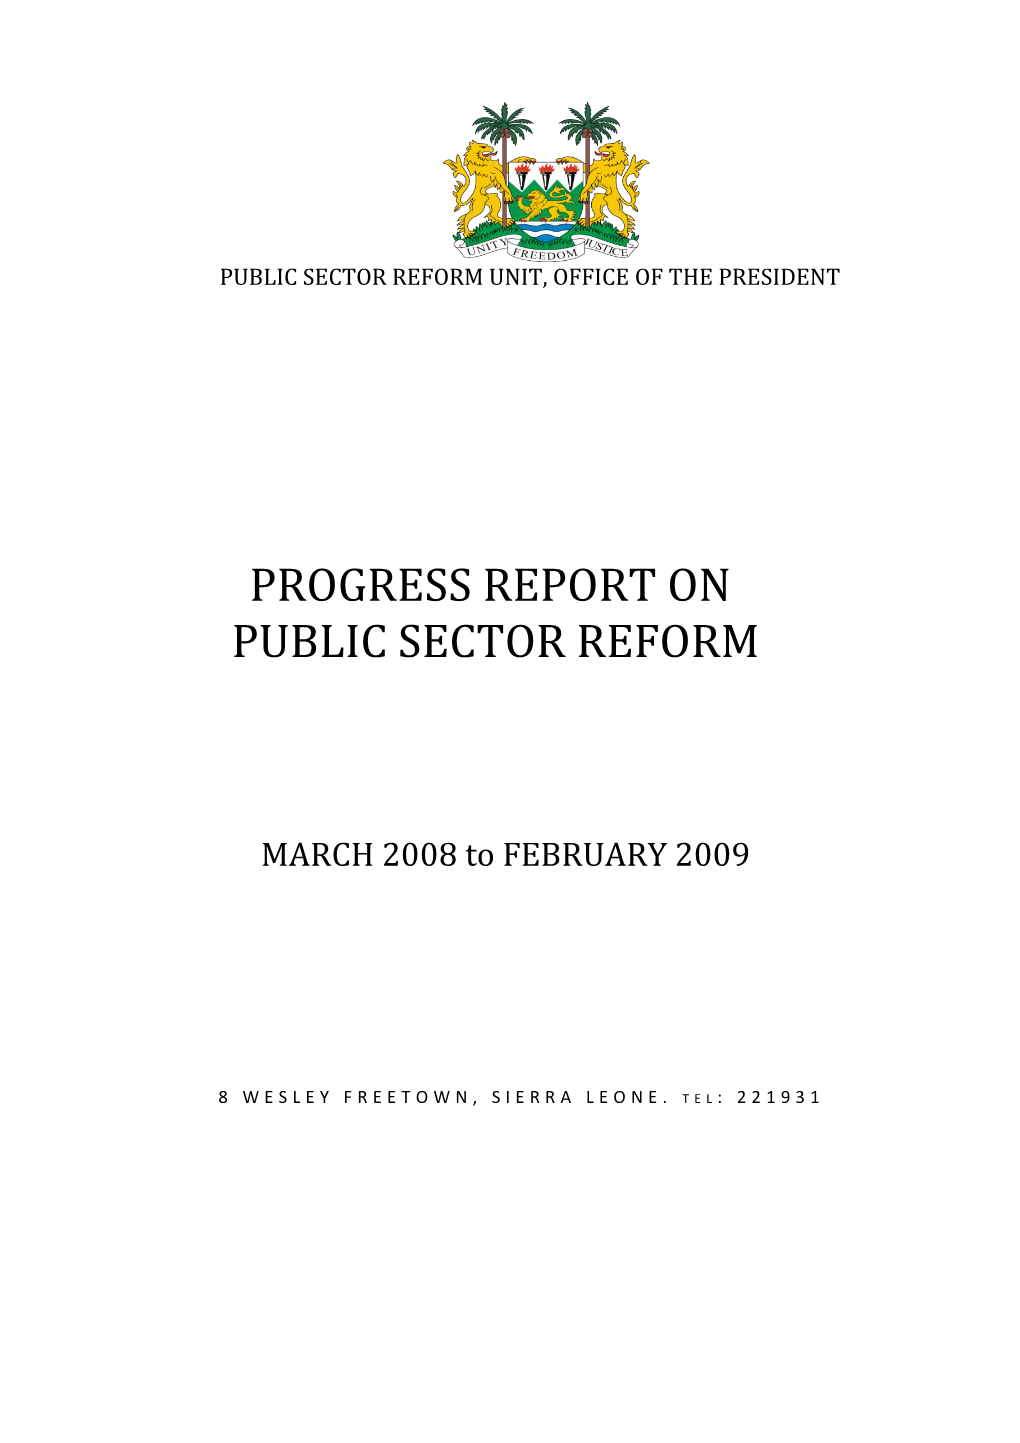 Progress Report on Public Sector Reform